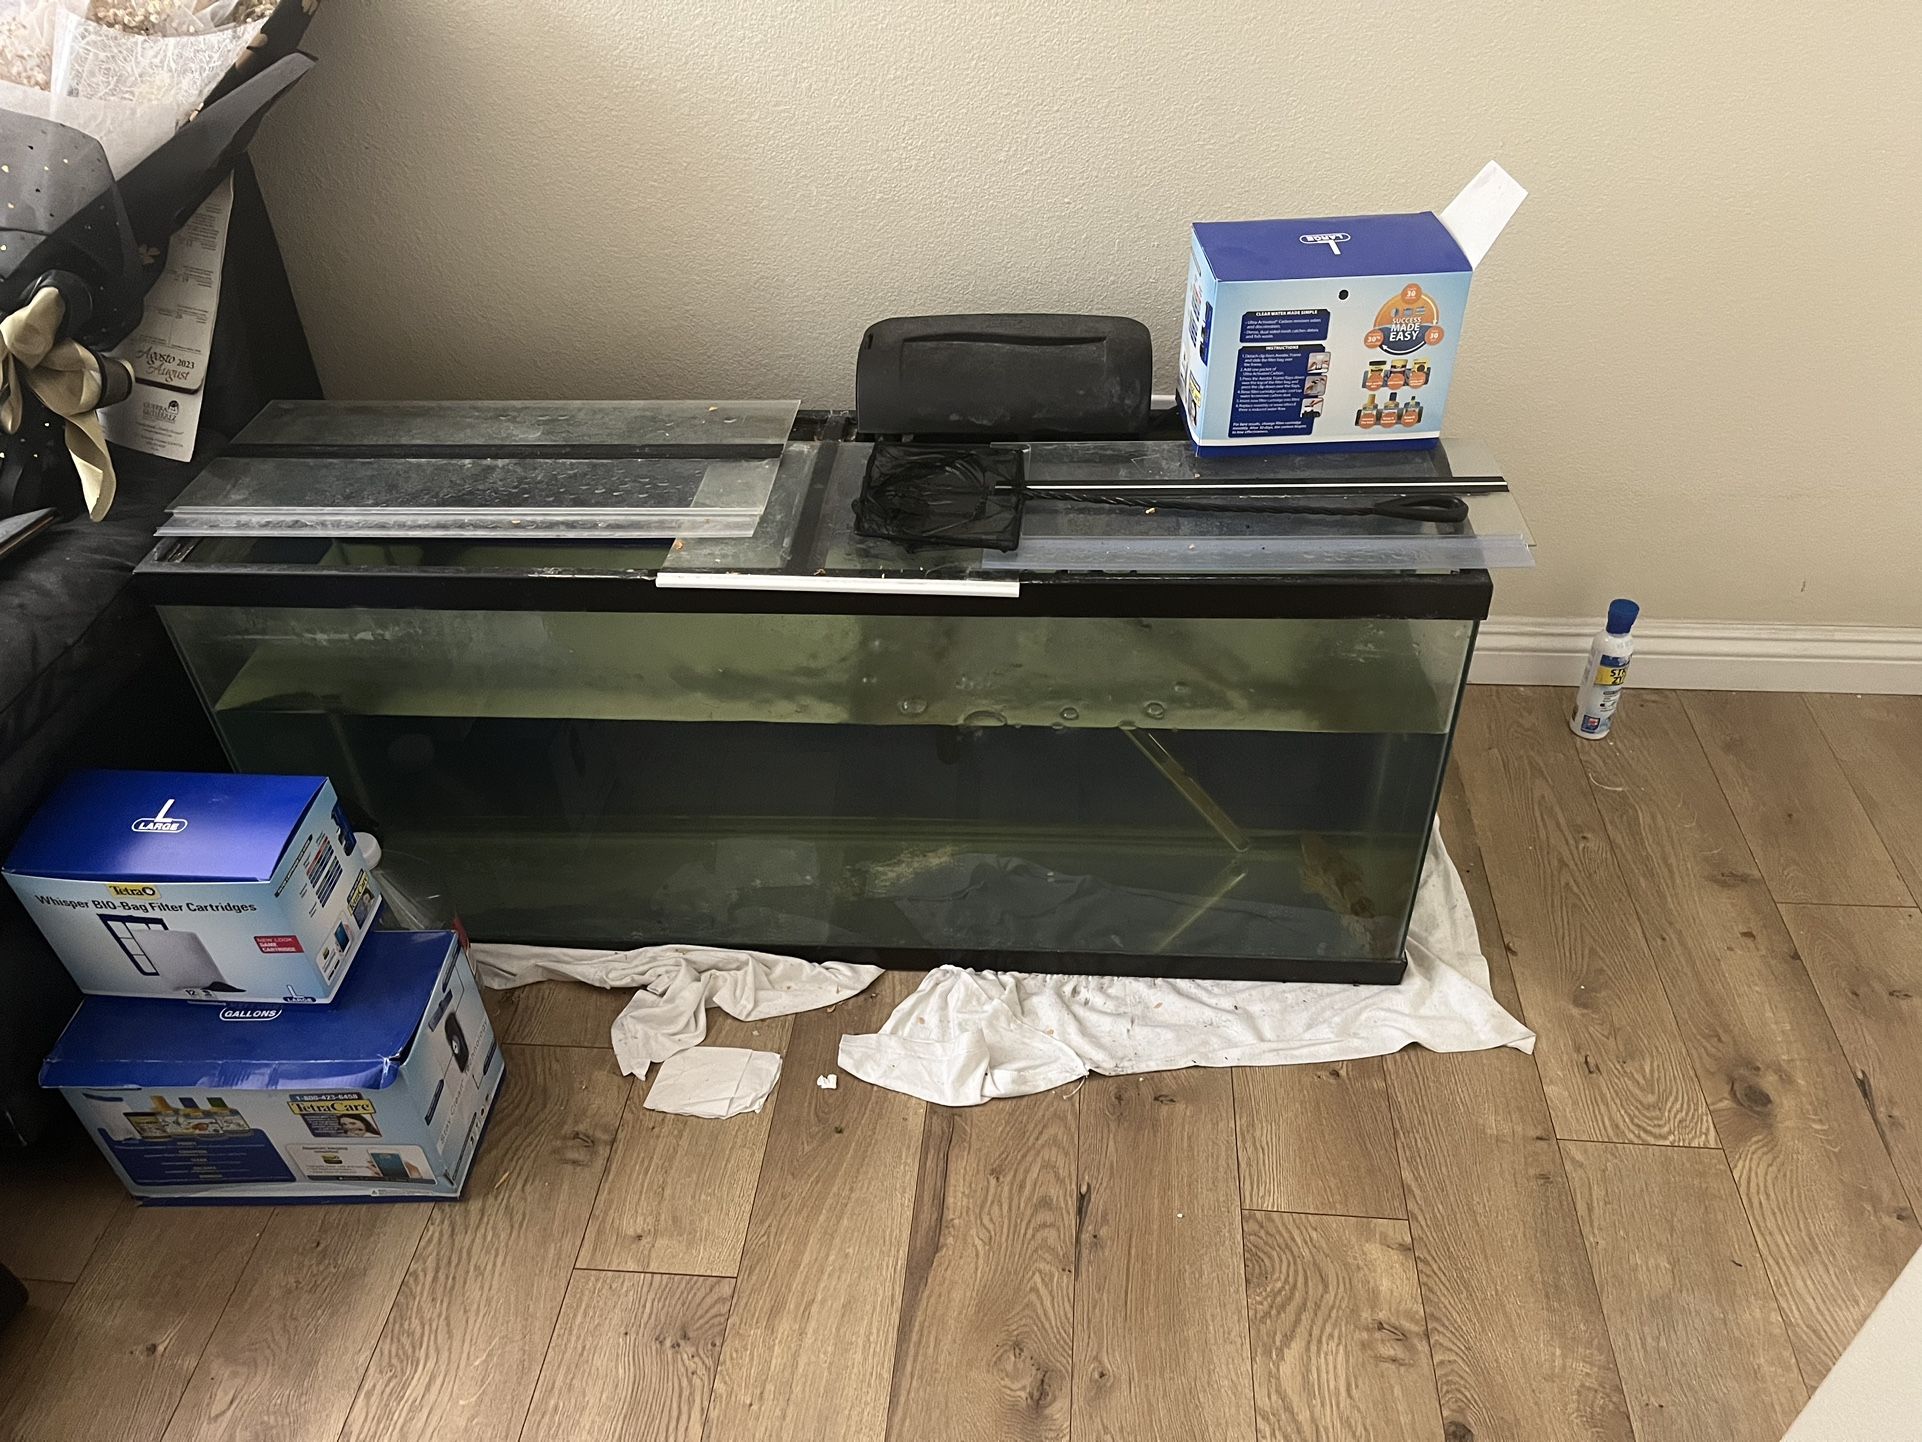 55 Gallon Fish Tank, 55 Gallon Water Filter, And Aquarium Heater